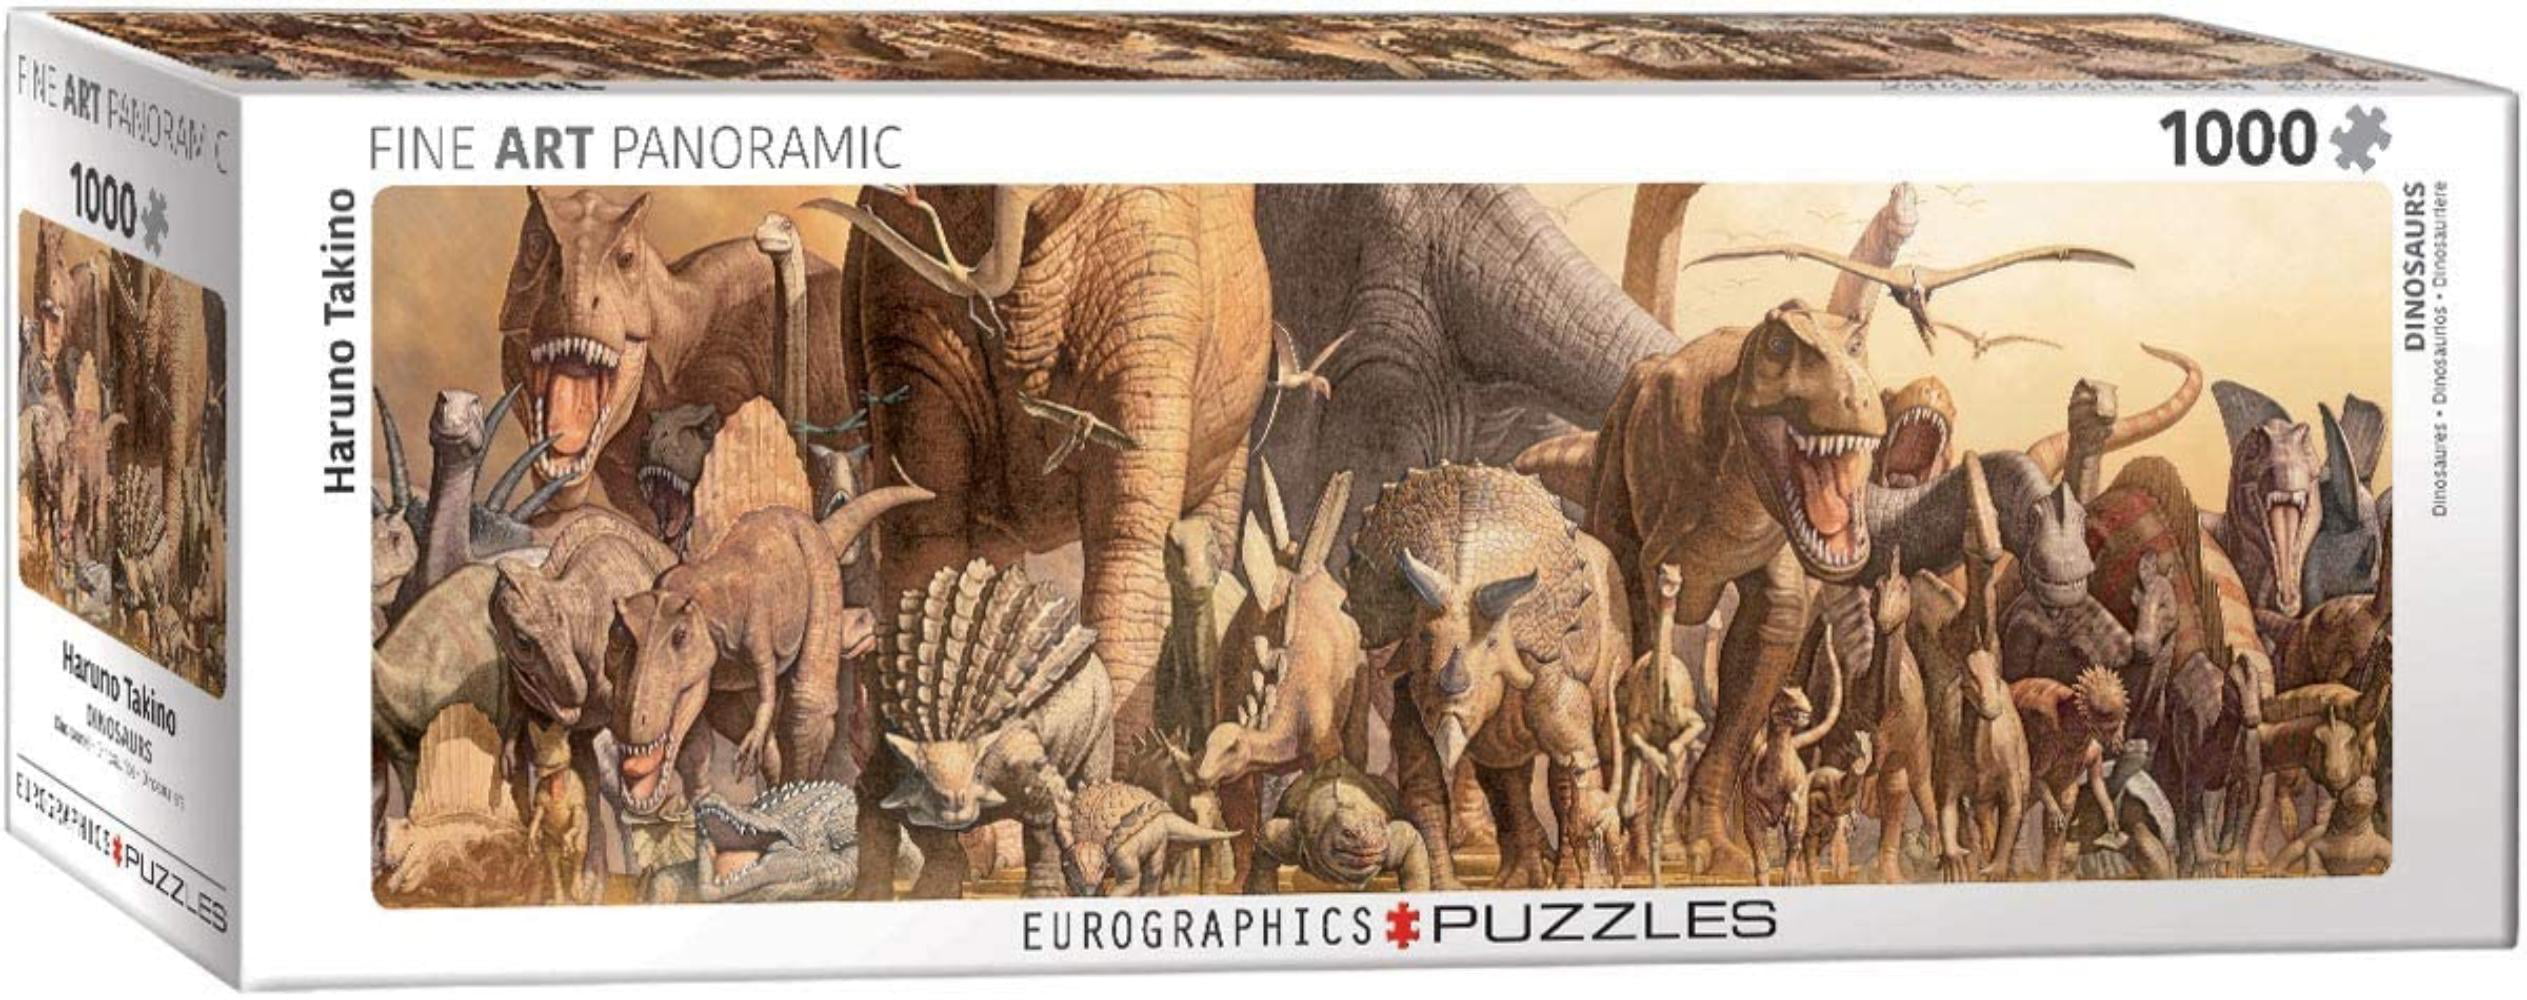 Eurographics Puzzle 1000 Piece Dinosaurs by Haruo Takino     EG60104650 